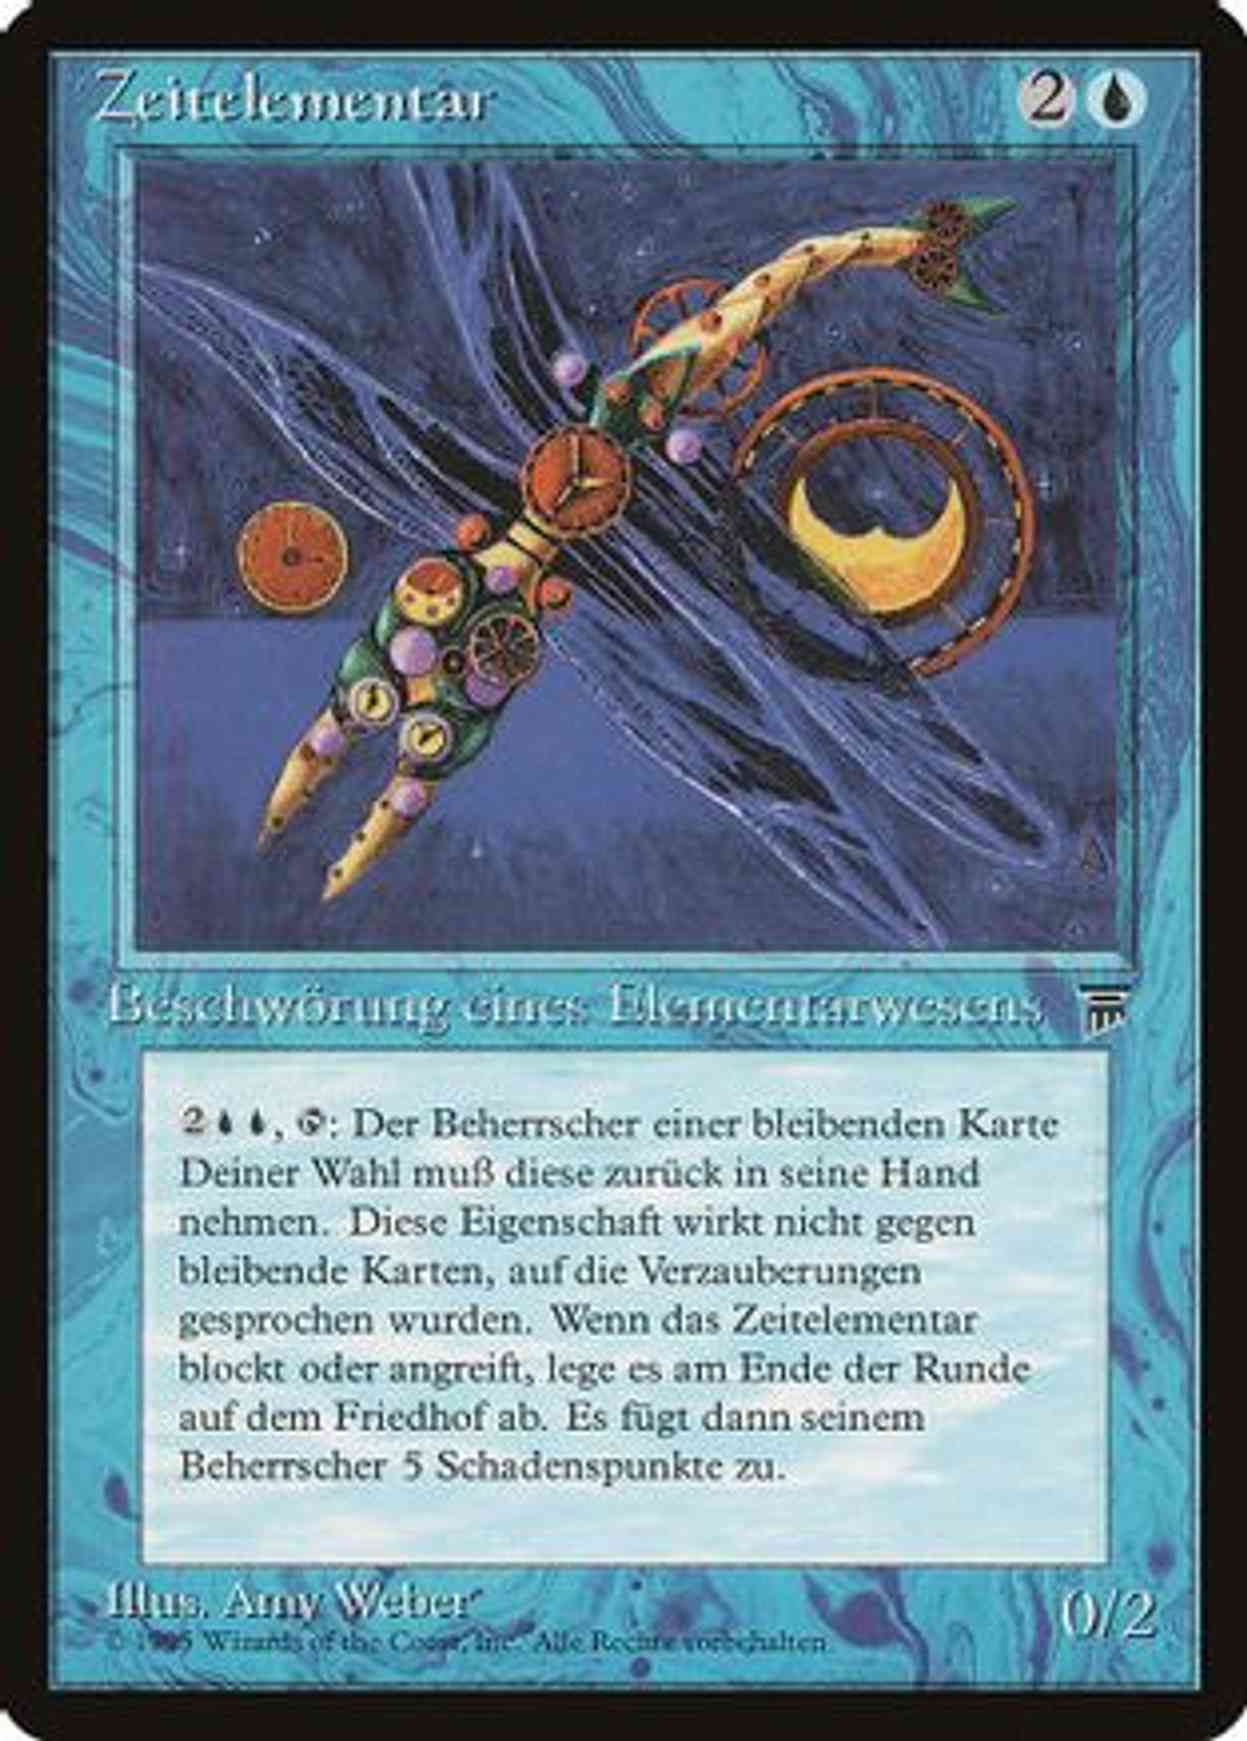 Time Elemental (German) - "Zeitelementar" magic card front